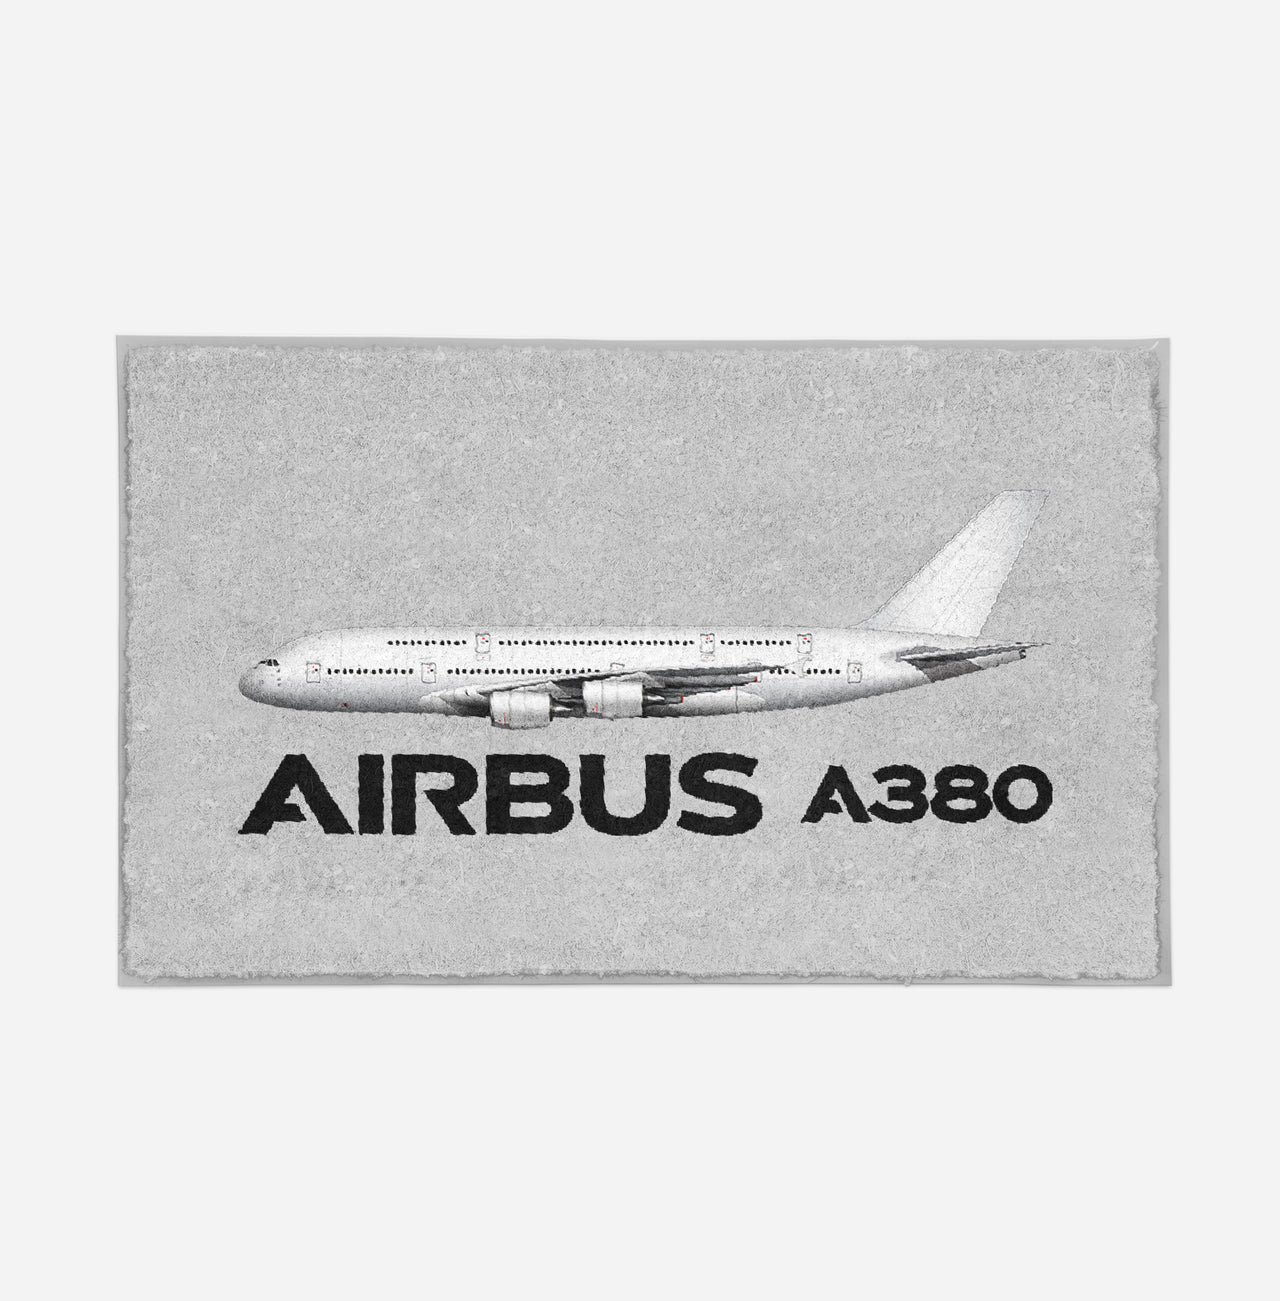 The Airbus A380 Designed Door Mats